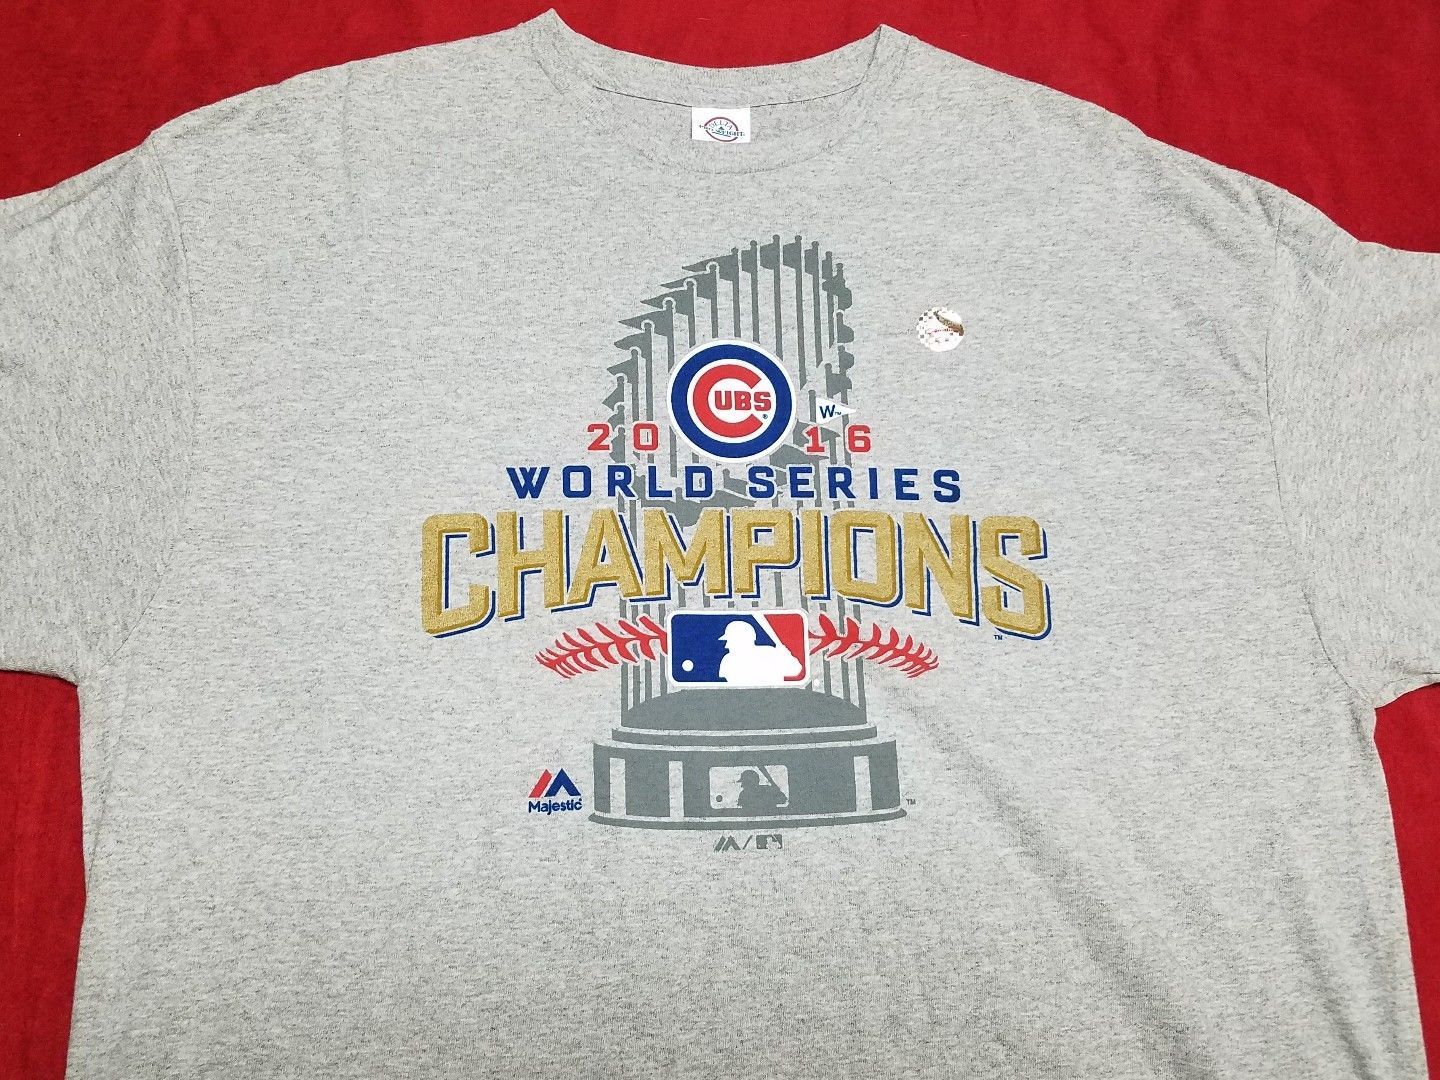 2016 Chicago Cubs World Series Tee Shirt Grey Brand New XLARGE Great Shirt! - $6.49